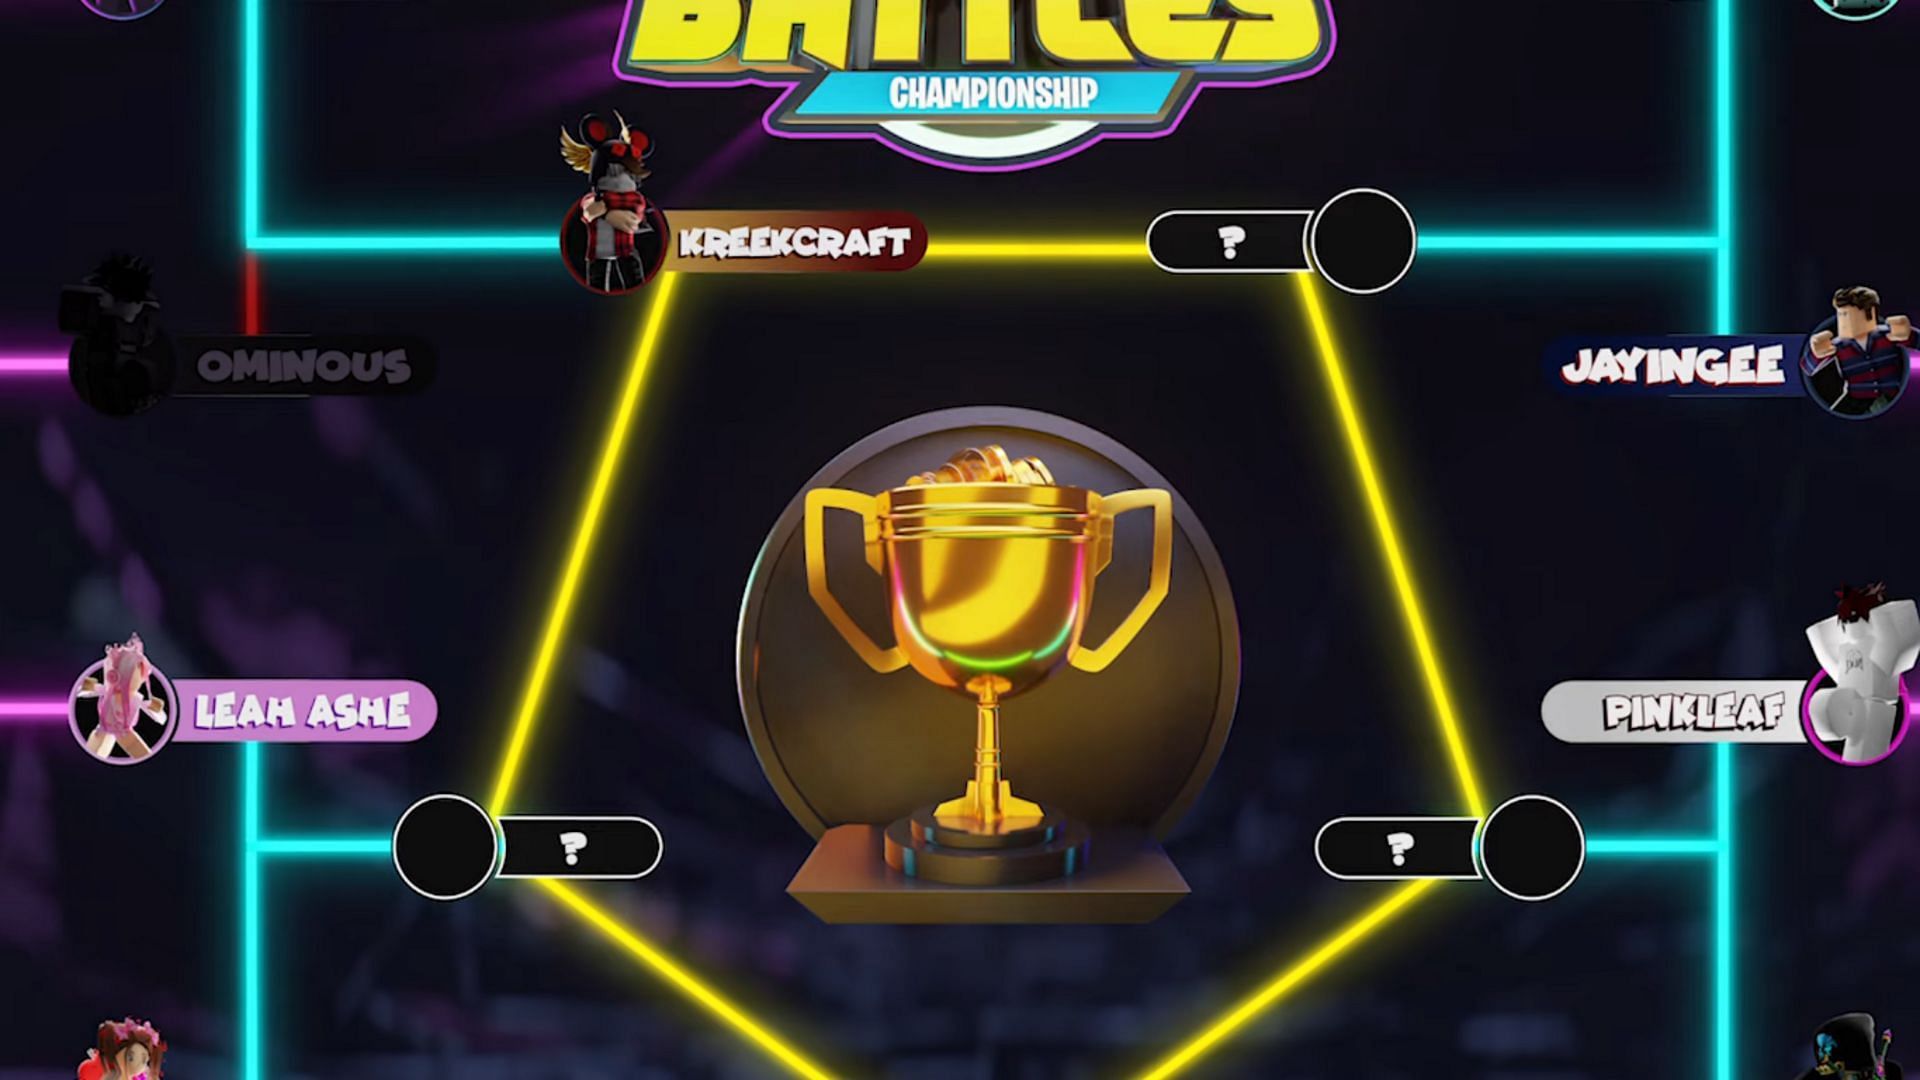 KreekCraft is the first finalist of RB Battles Season 3 Championship (Image via Roblox Battles YouTube)